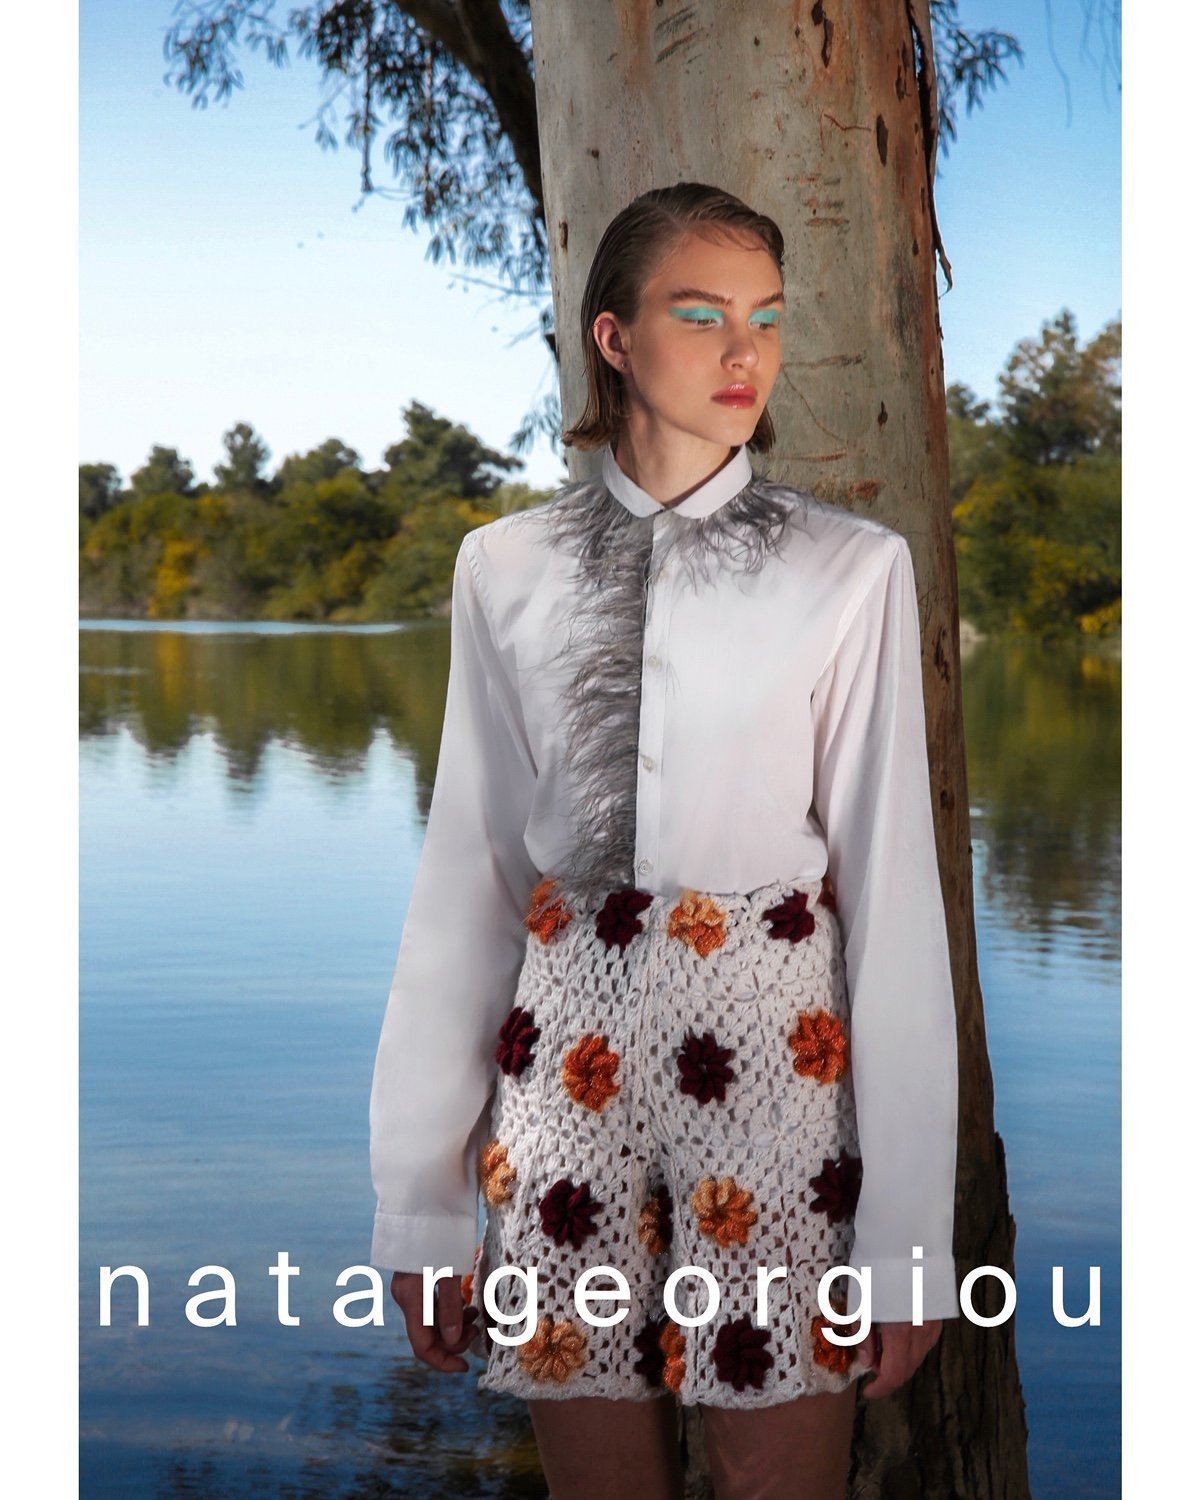 NatarGeorgiou campaign